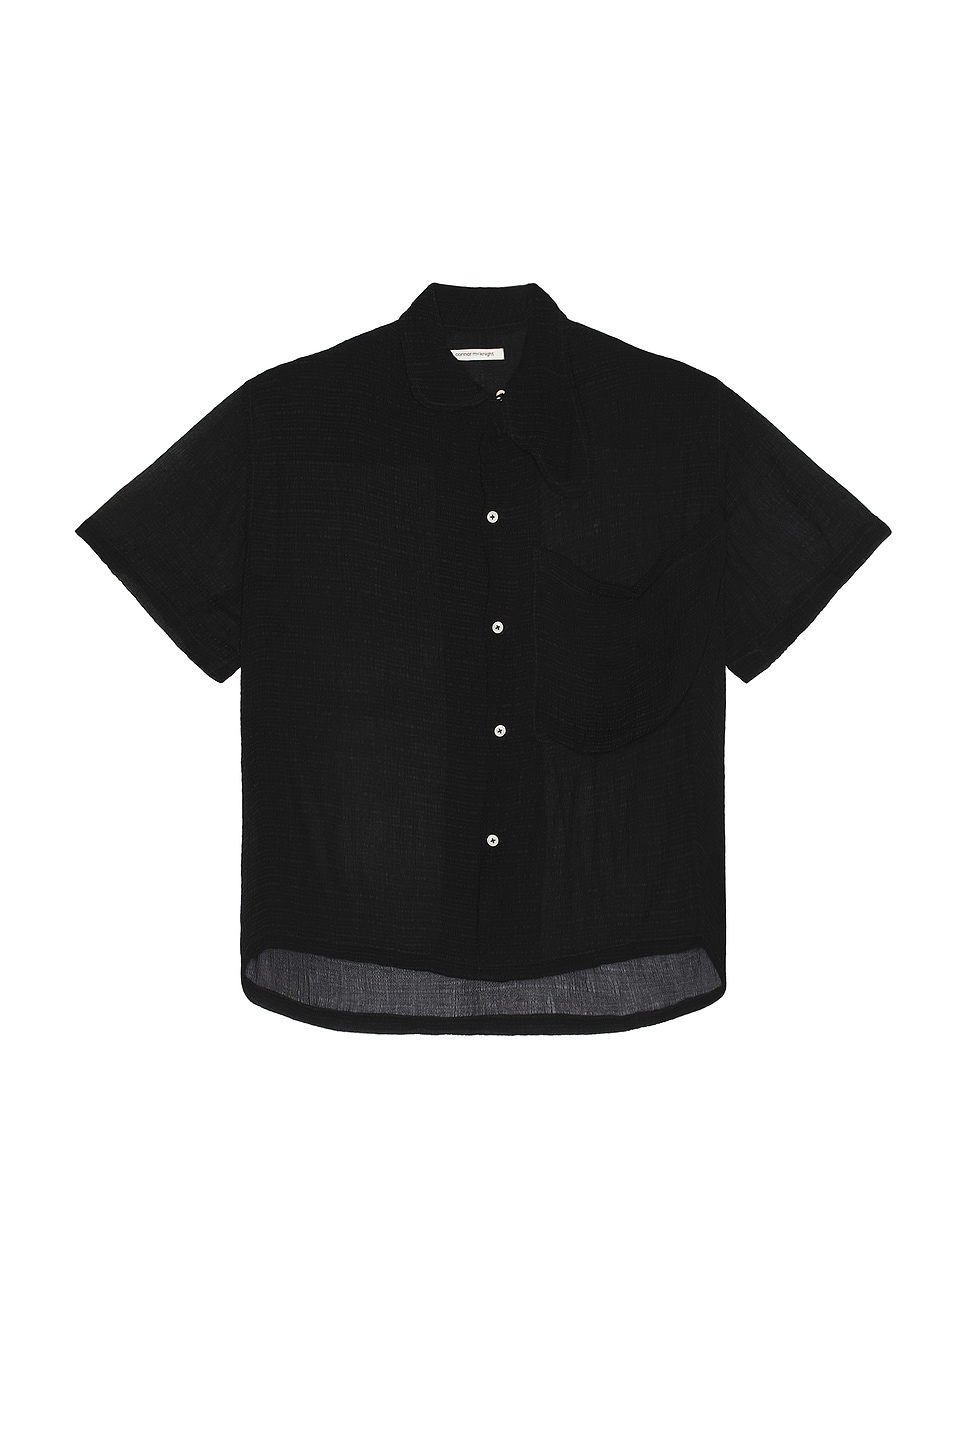 Image 1 of Connor McKnight Crinkle Short Sleeve Big Pocket Shirt in Black